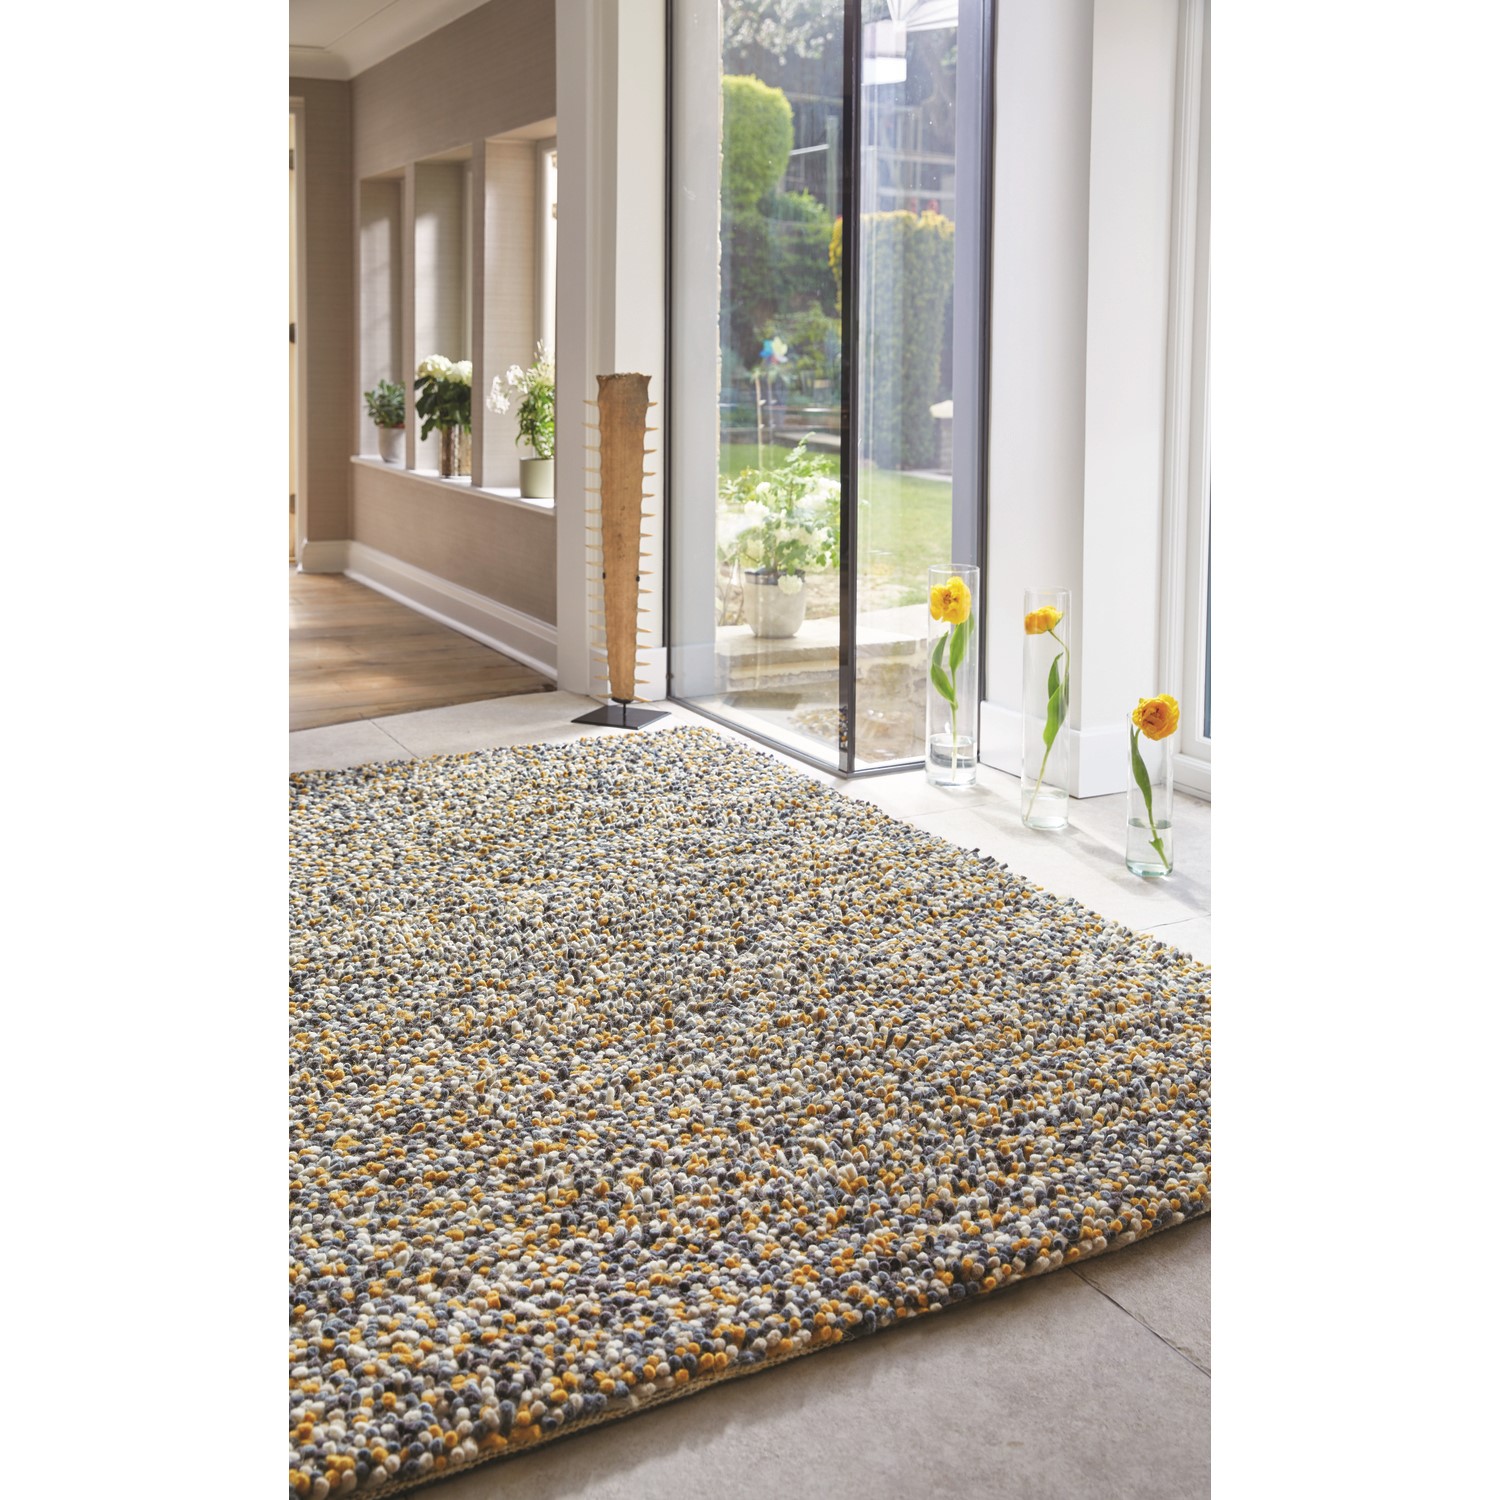 Read more about Ripley rocks shaggy rug in ochre 160x230cm